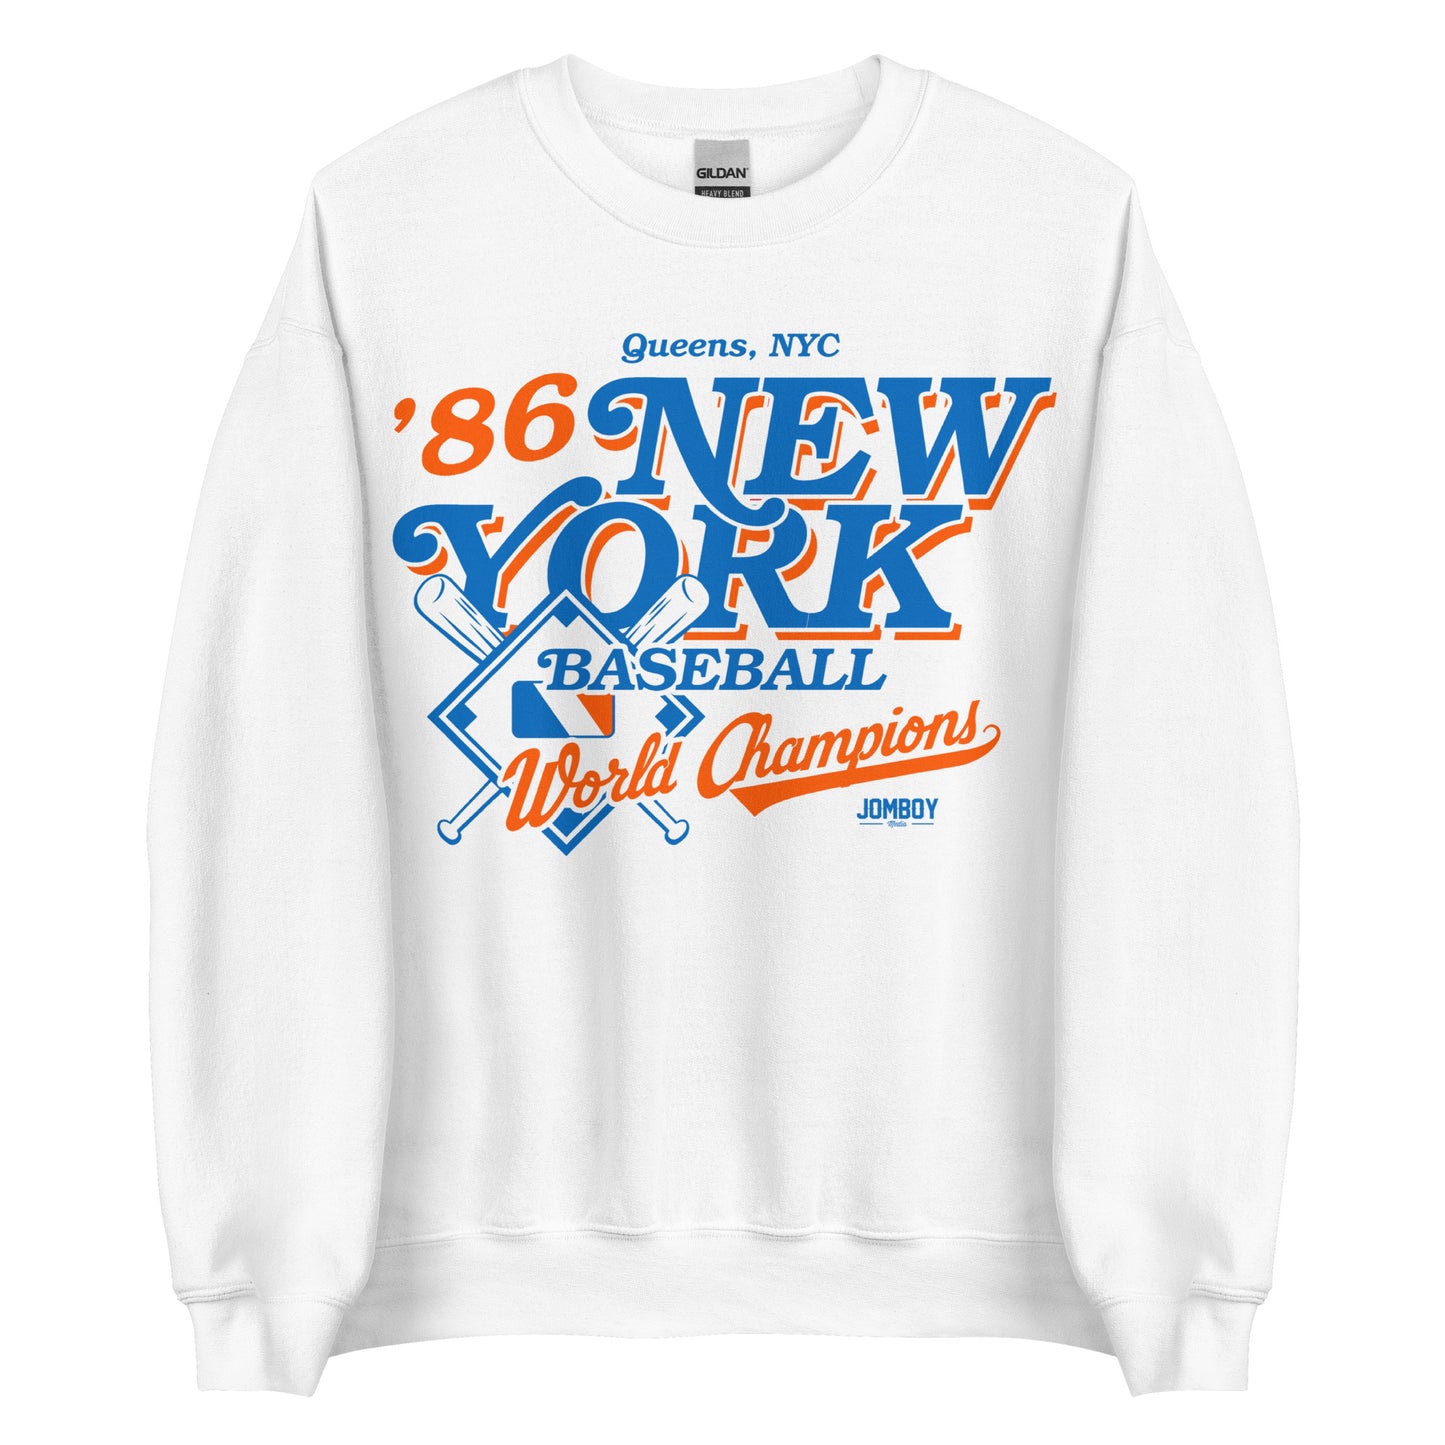 NYM - City Vintage Sweatshirt